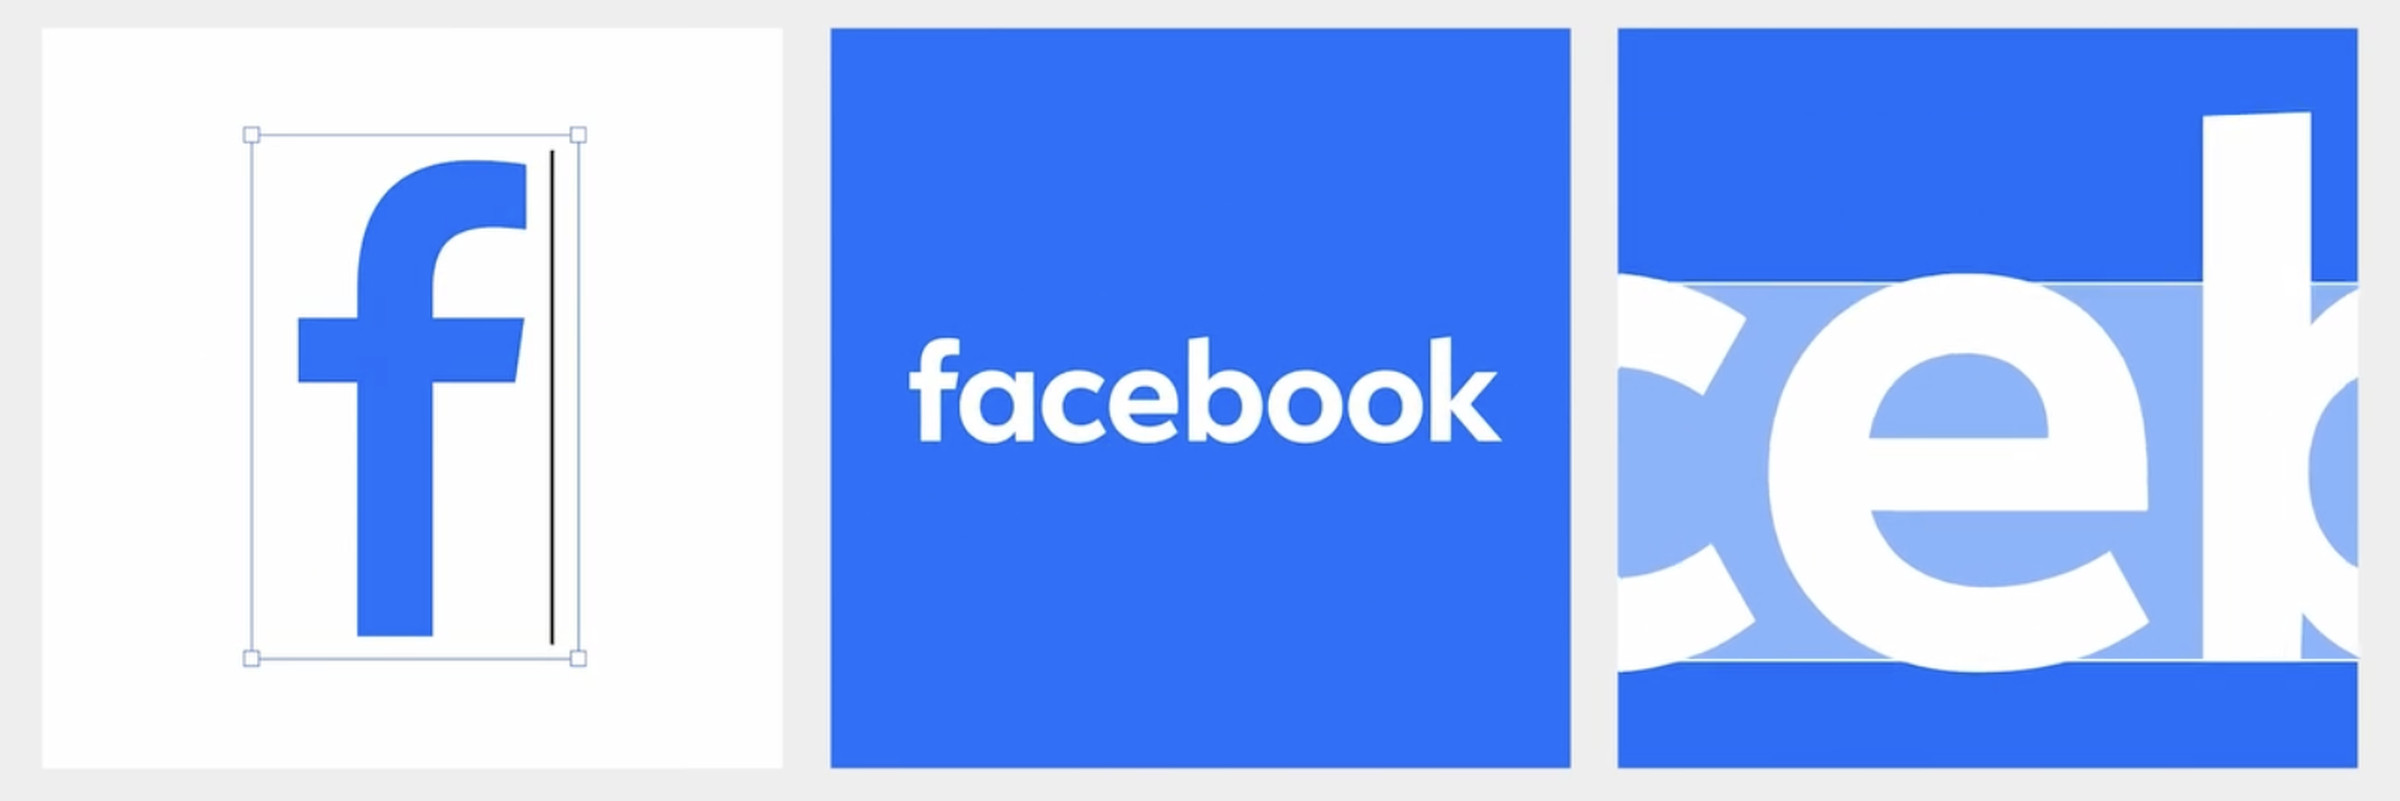 Images showing the Facebook wordmark and other Facebook design tweaks.